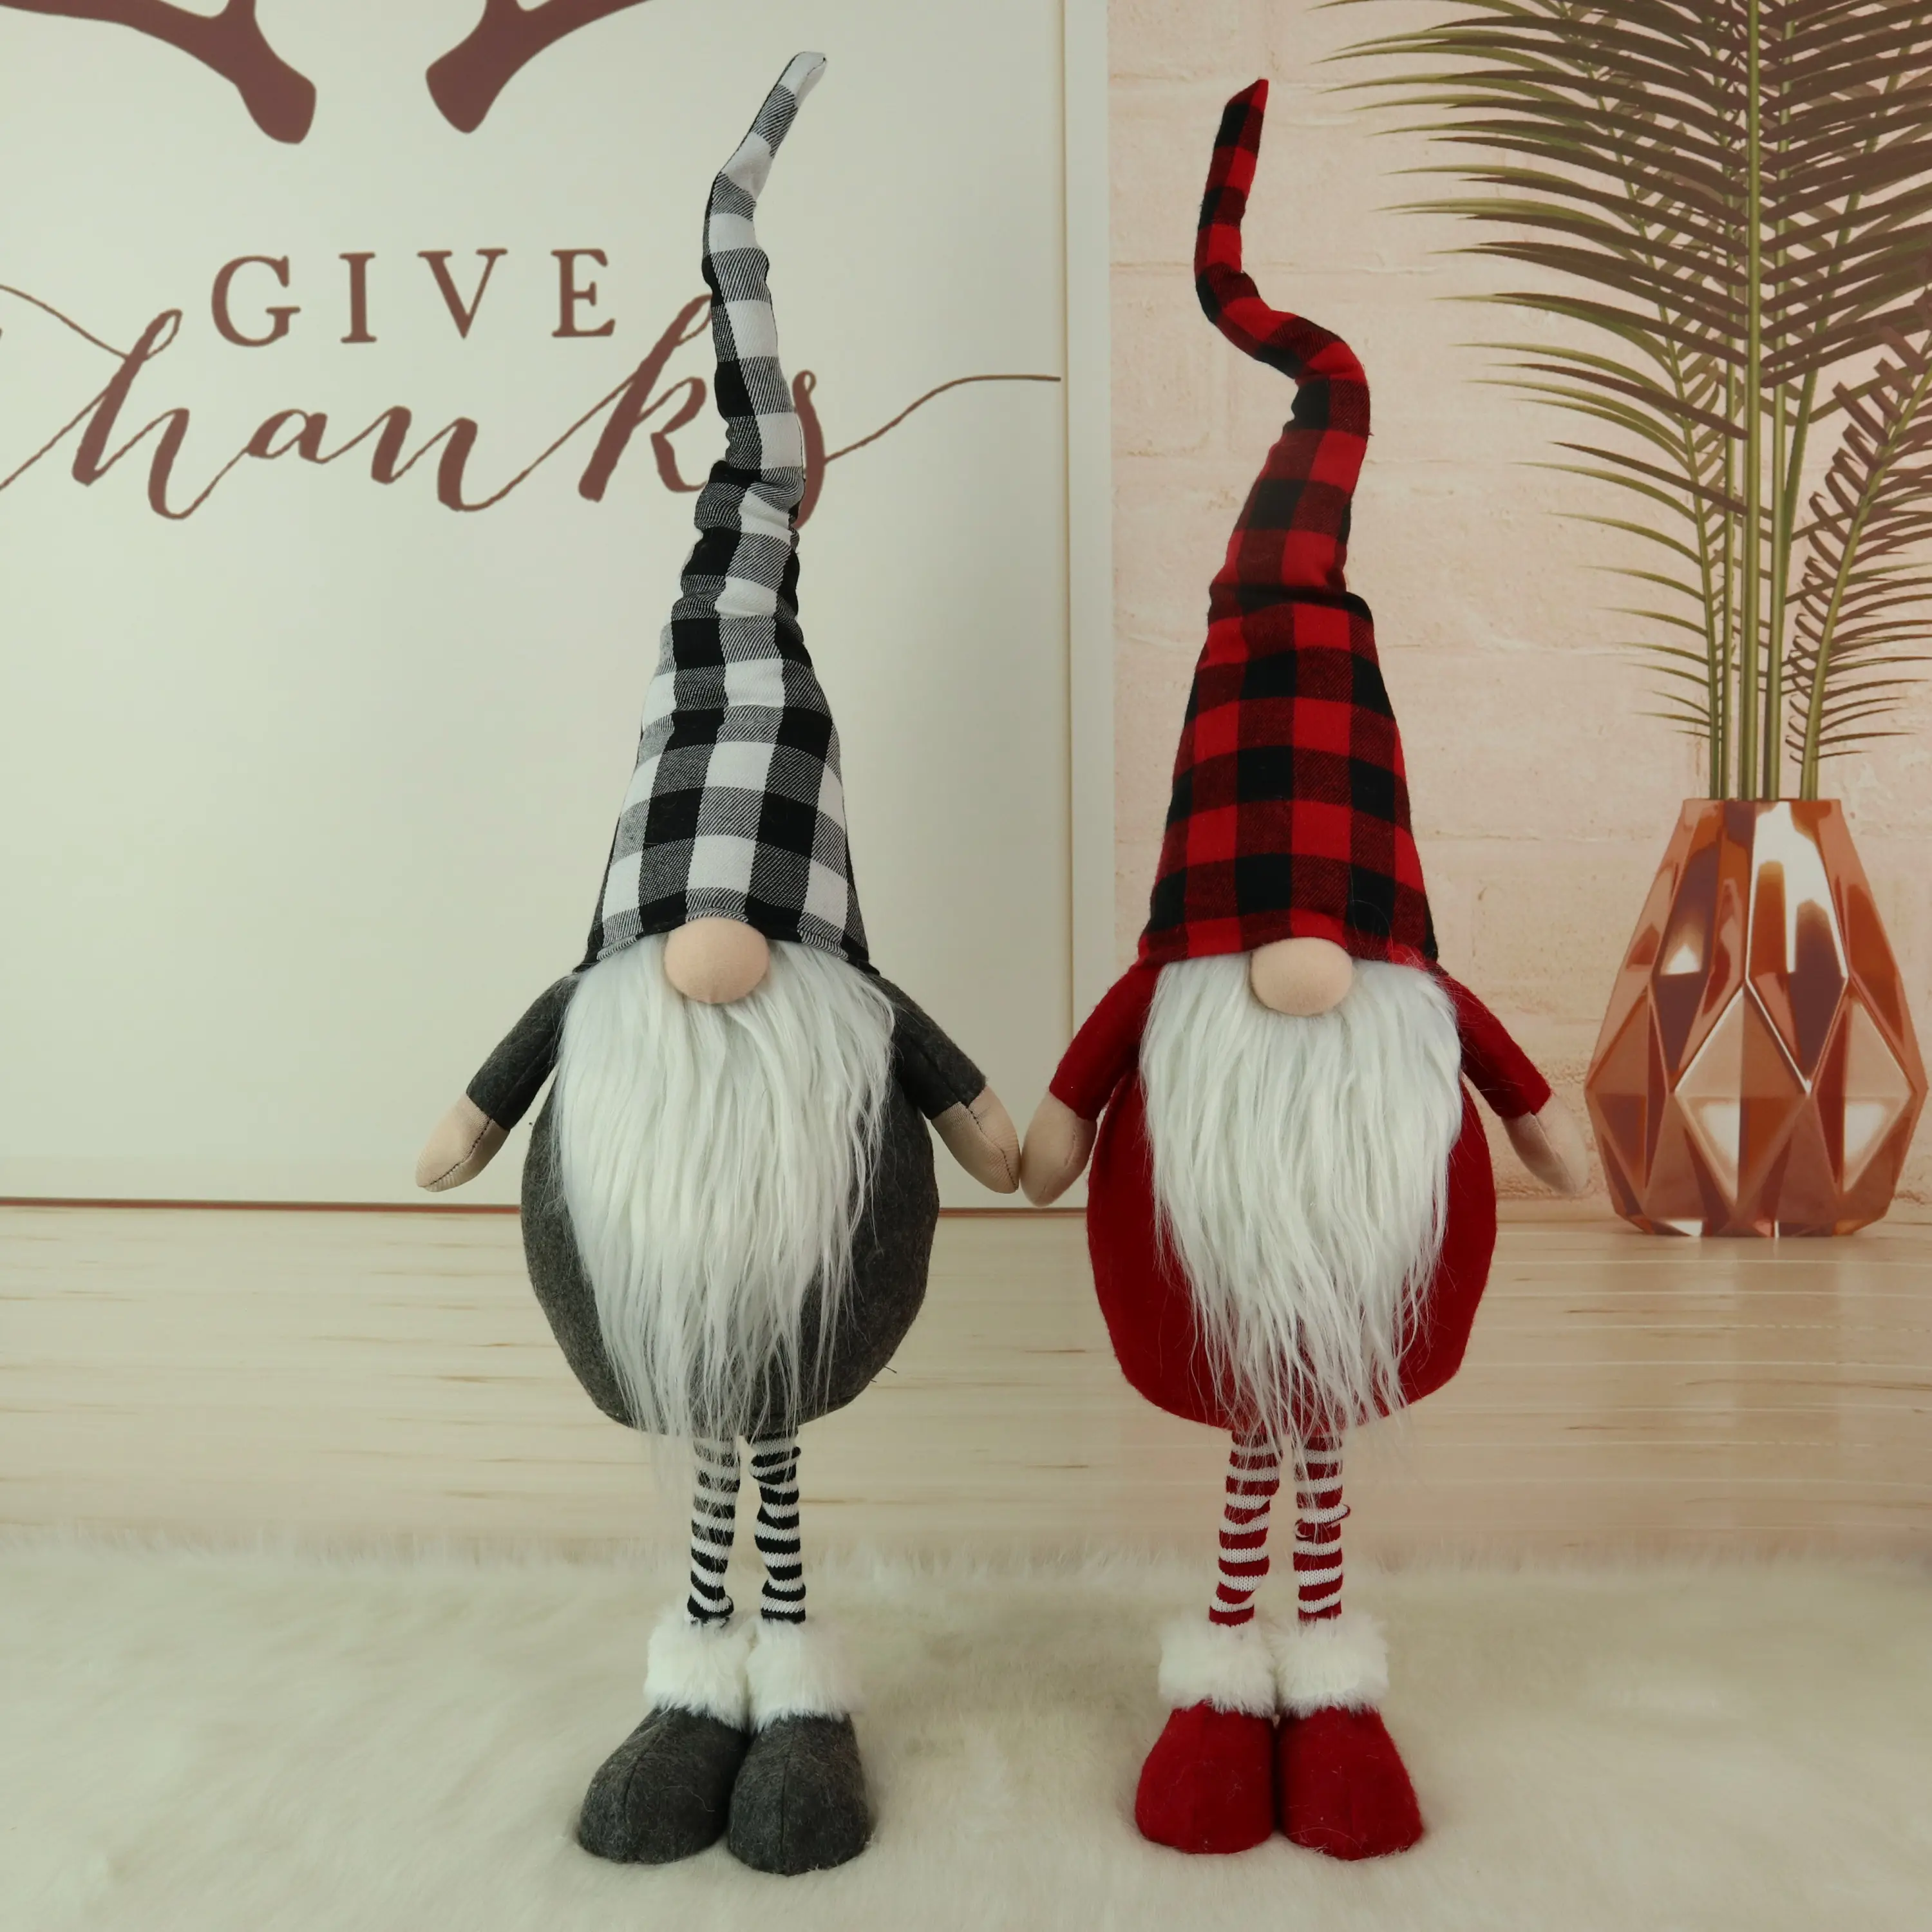 New Christmas Gifts Handmade Fabric Santa Dolls Noel Xmas Home Ornaments Stuffed Small Gnome For Christmas Decor